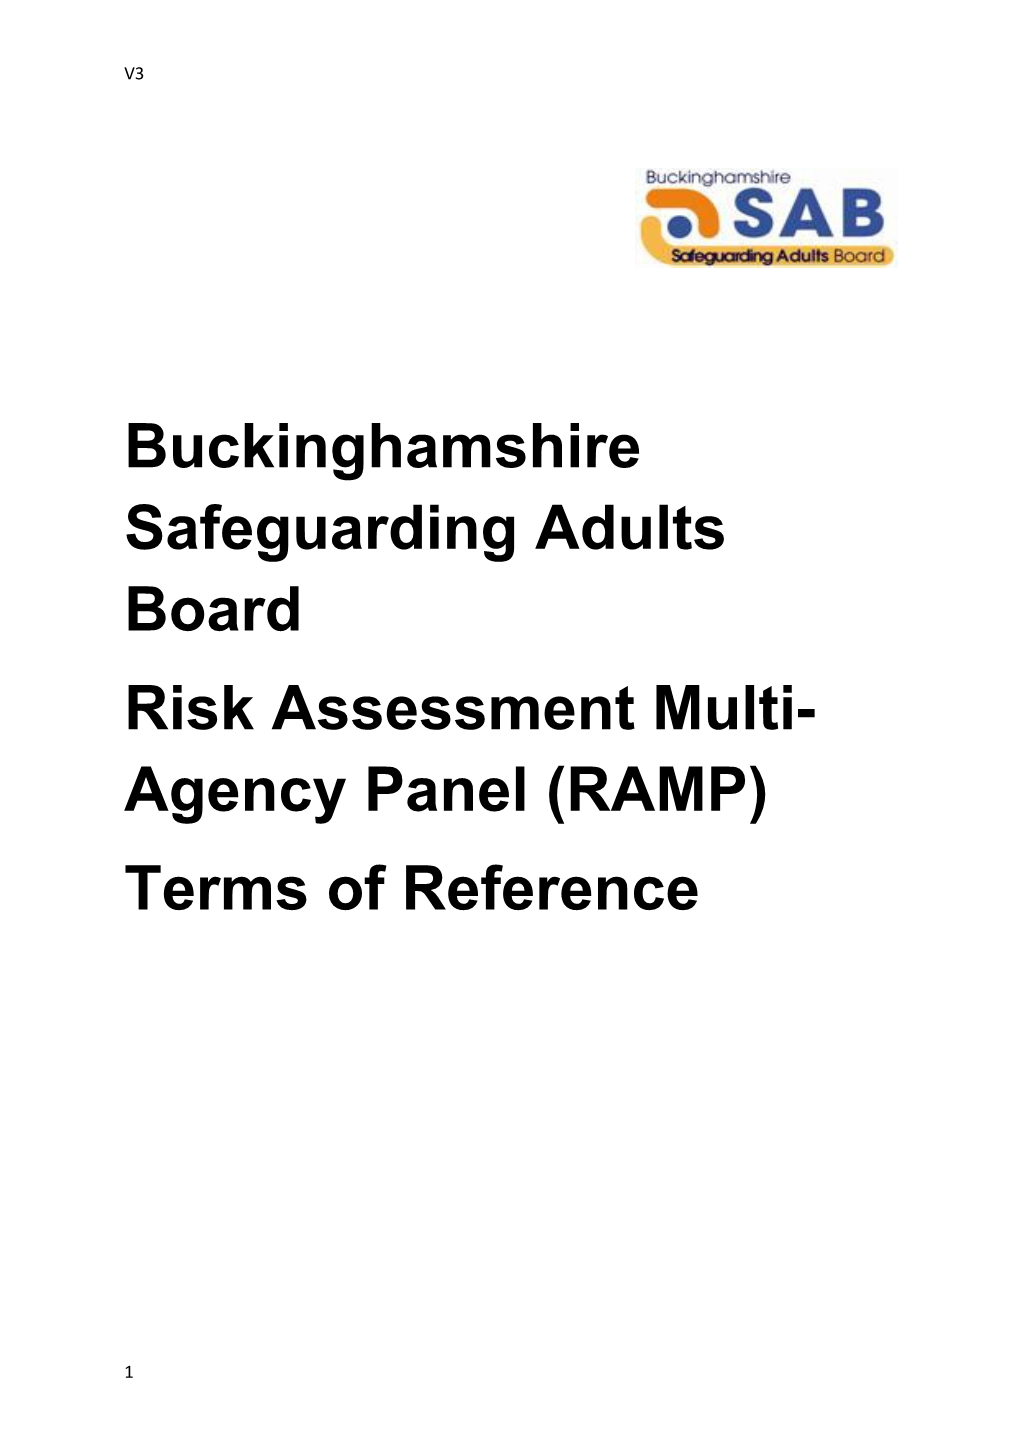 Buckinghamshire Safeguarding Adults Board